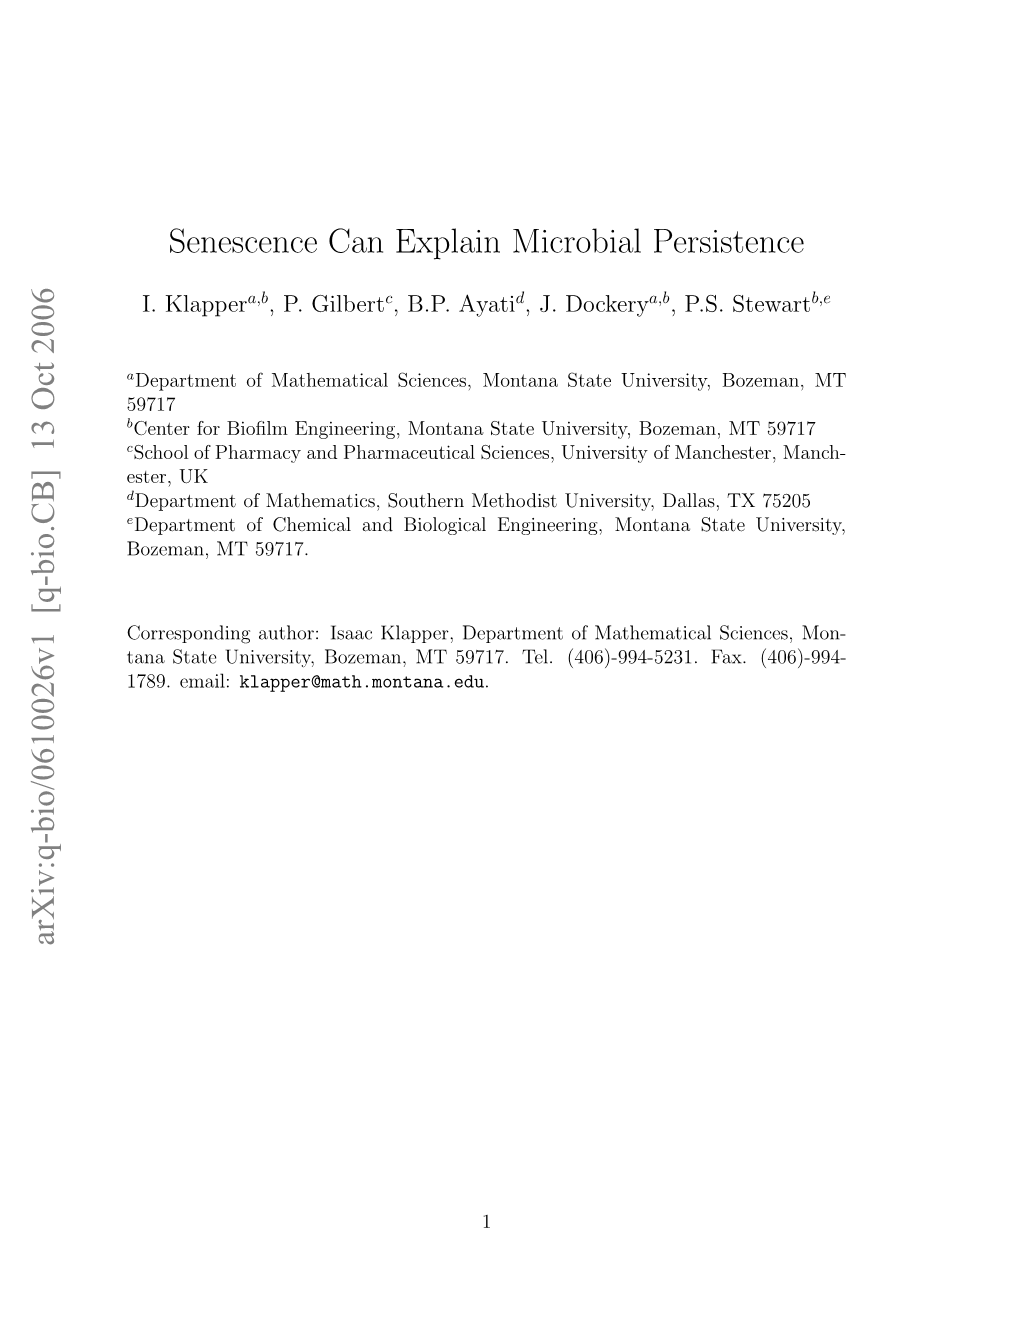 [Q-Bio.CB] 13 Oct 2006 Senescence Can Explain Microbial Persistence